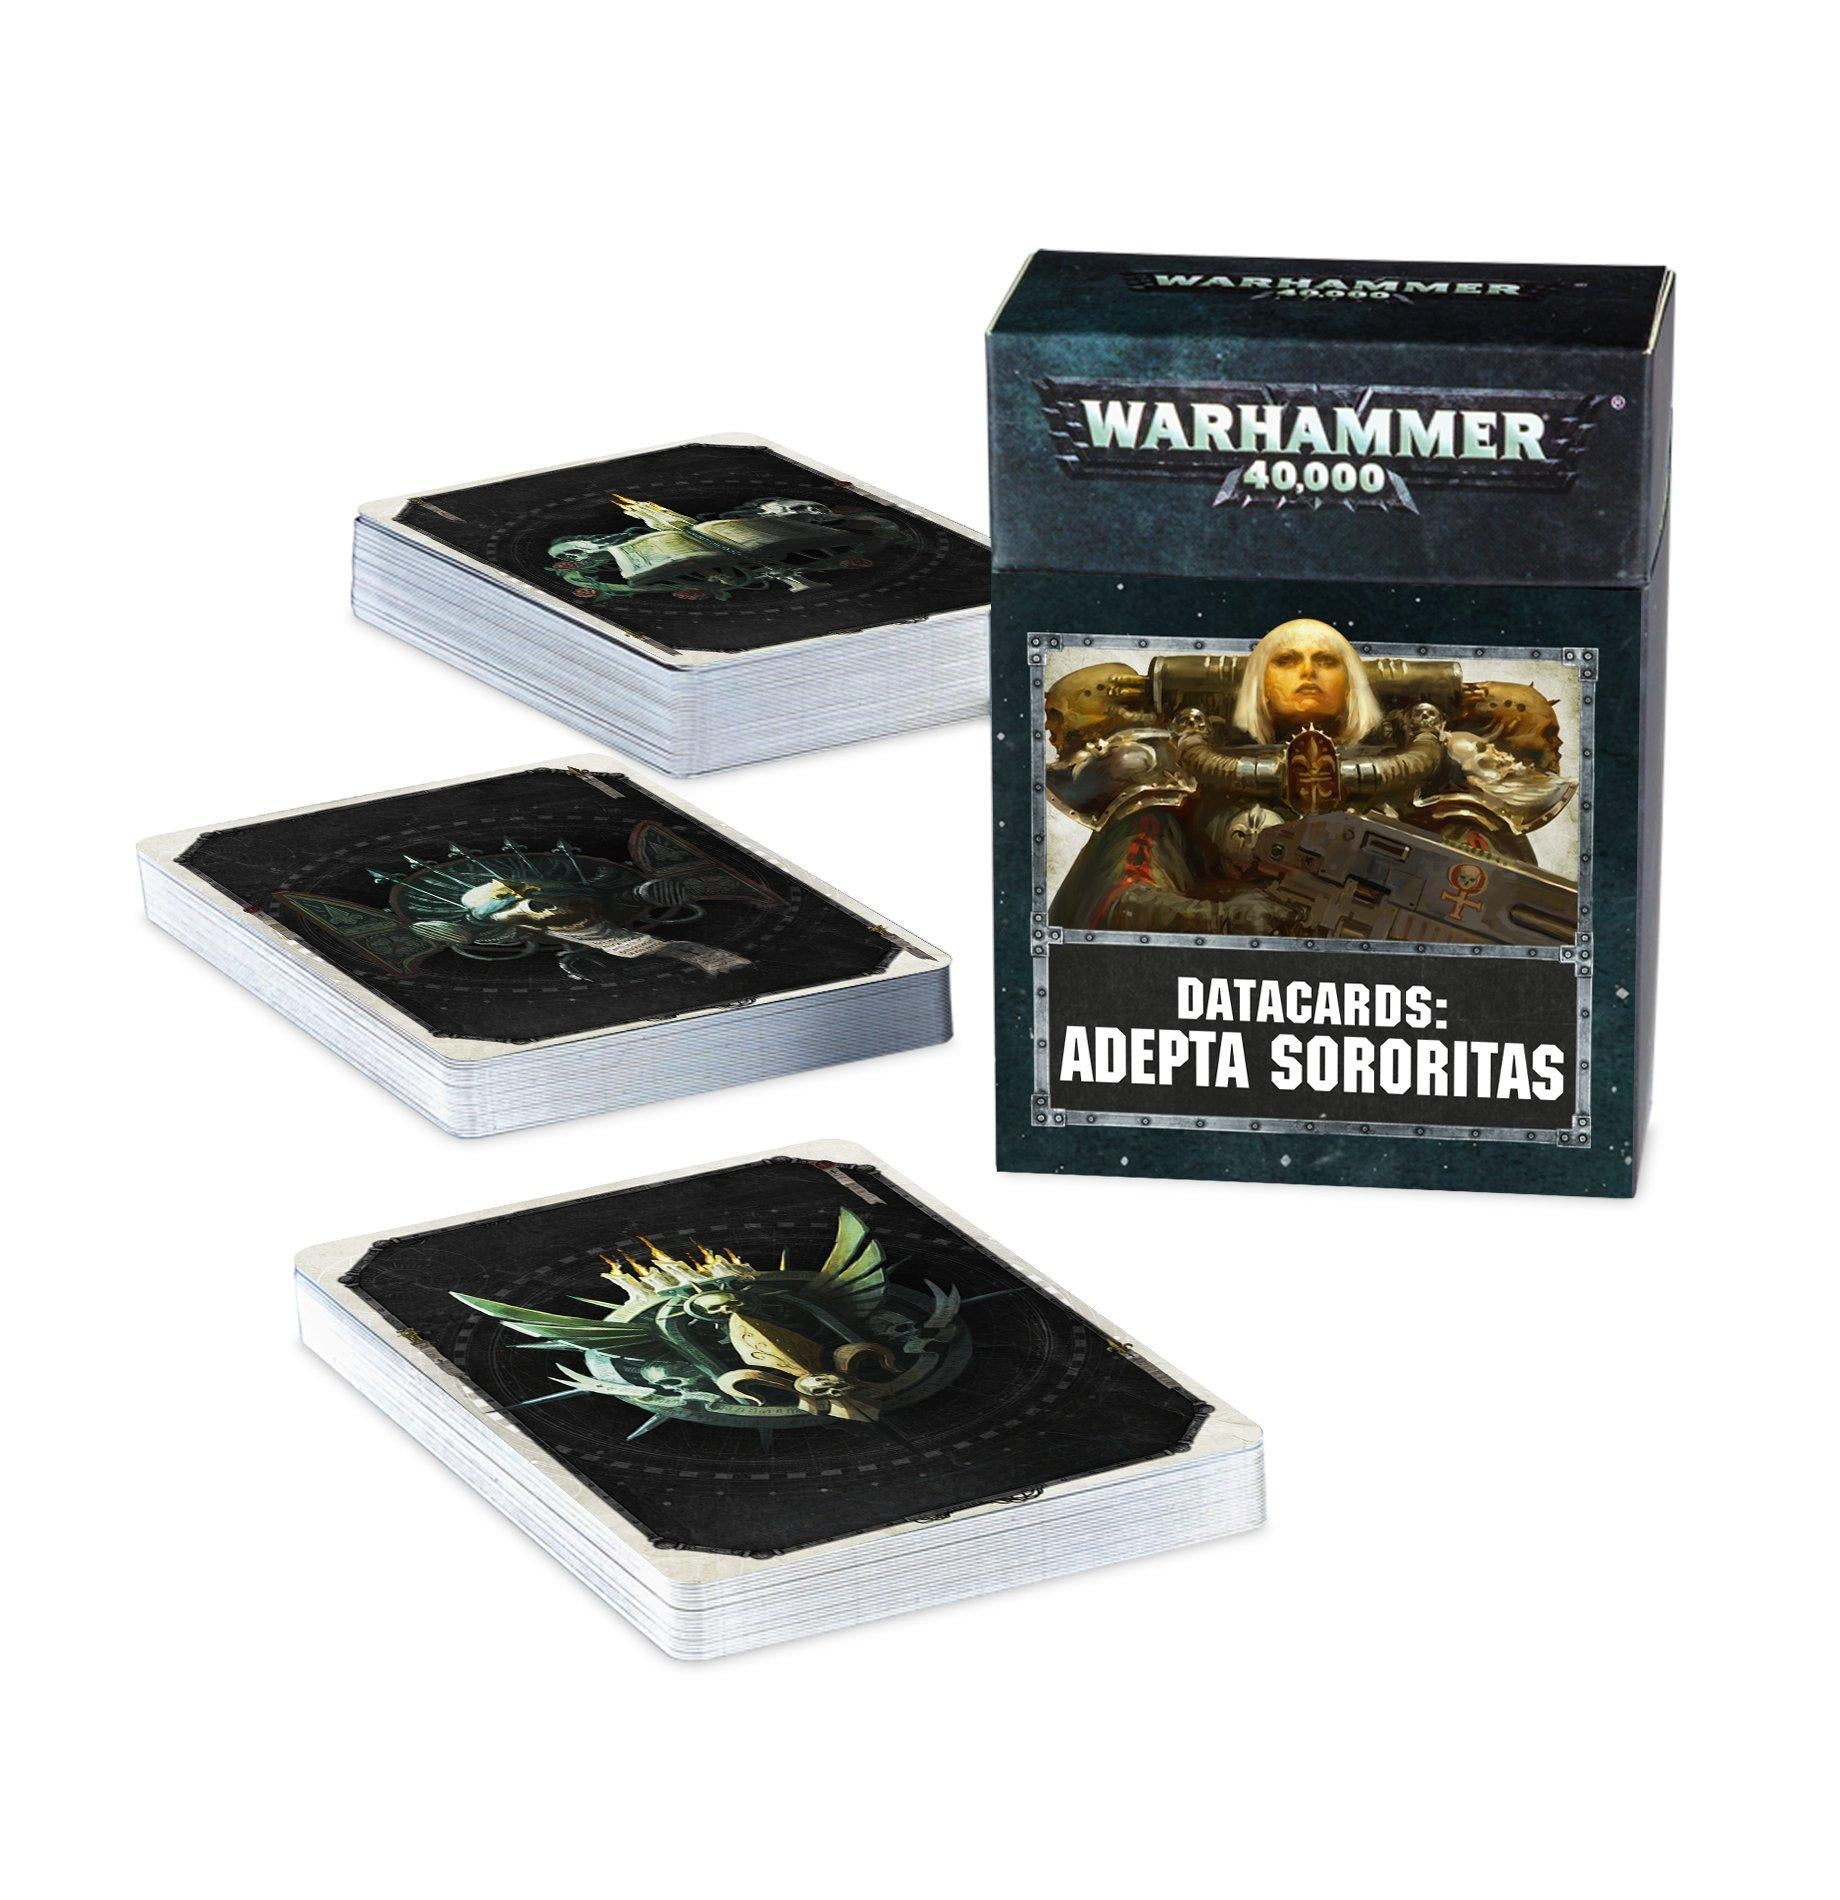  Games Workshop Warhammer 40,000 Adepta Sororitas